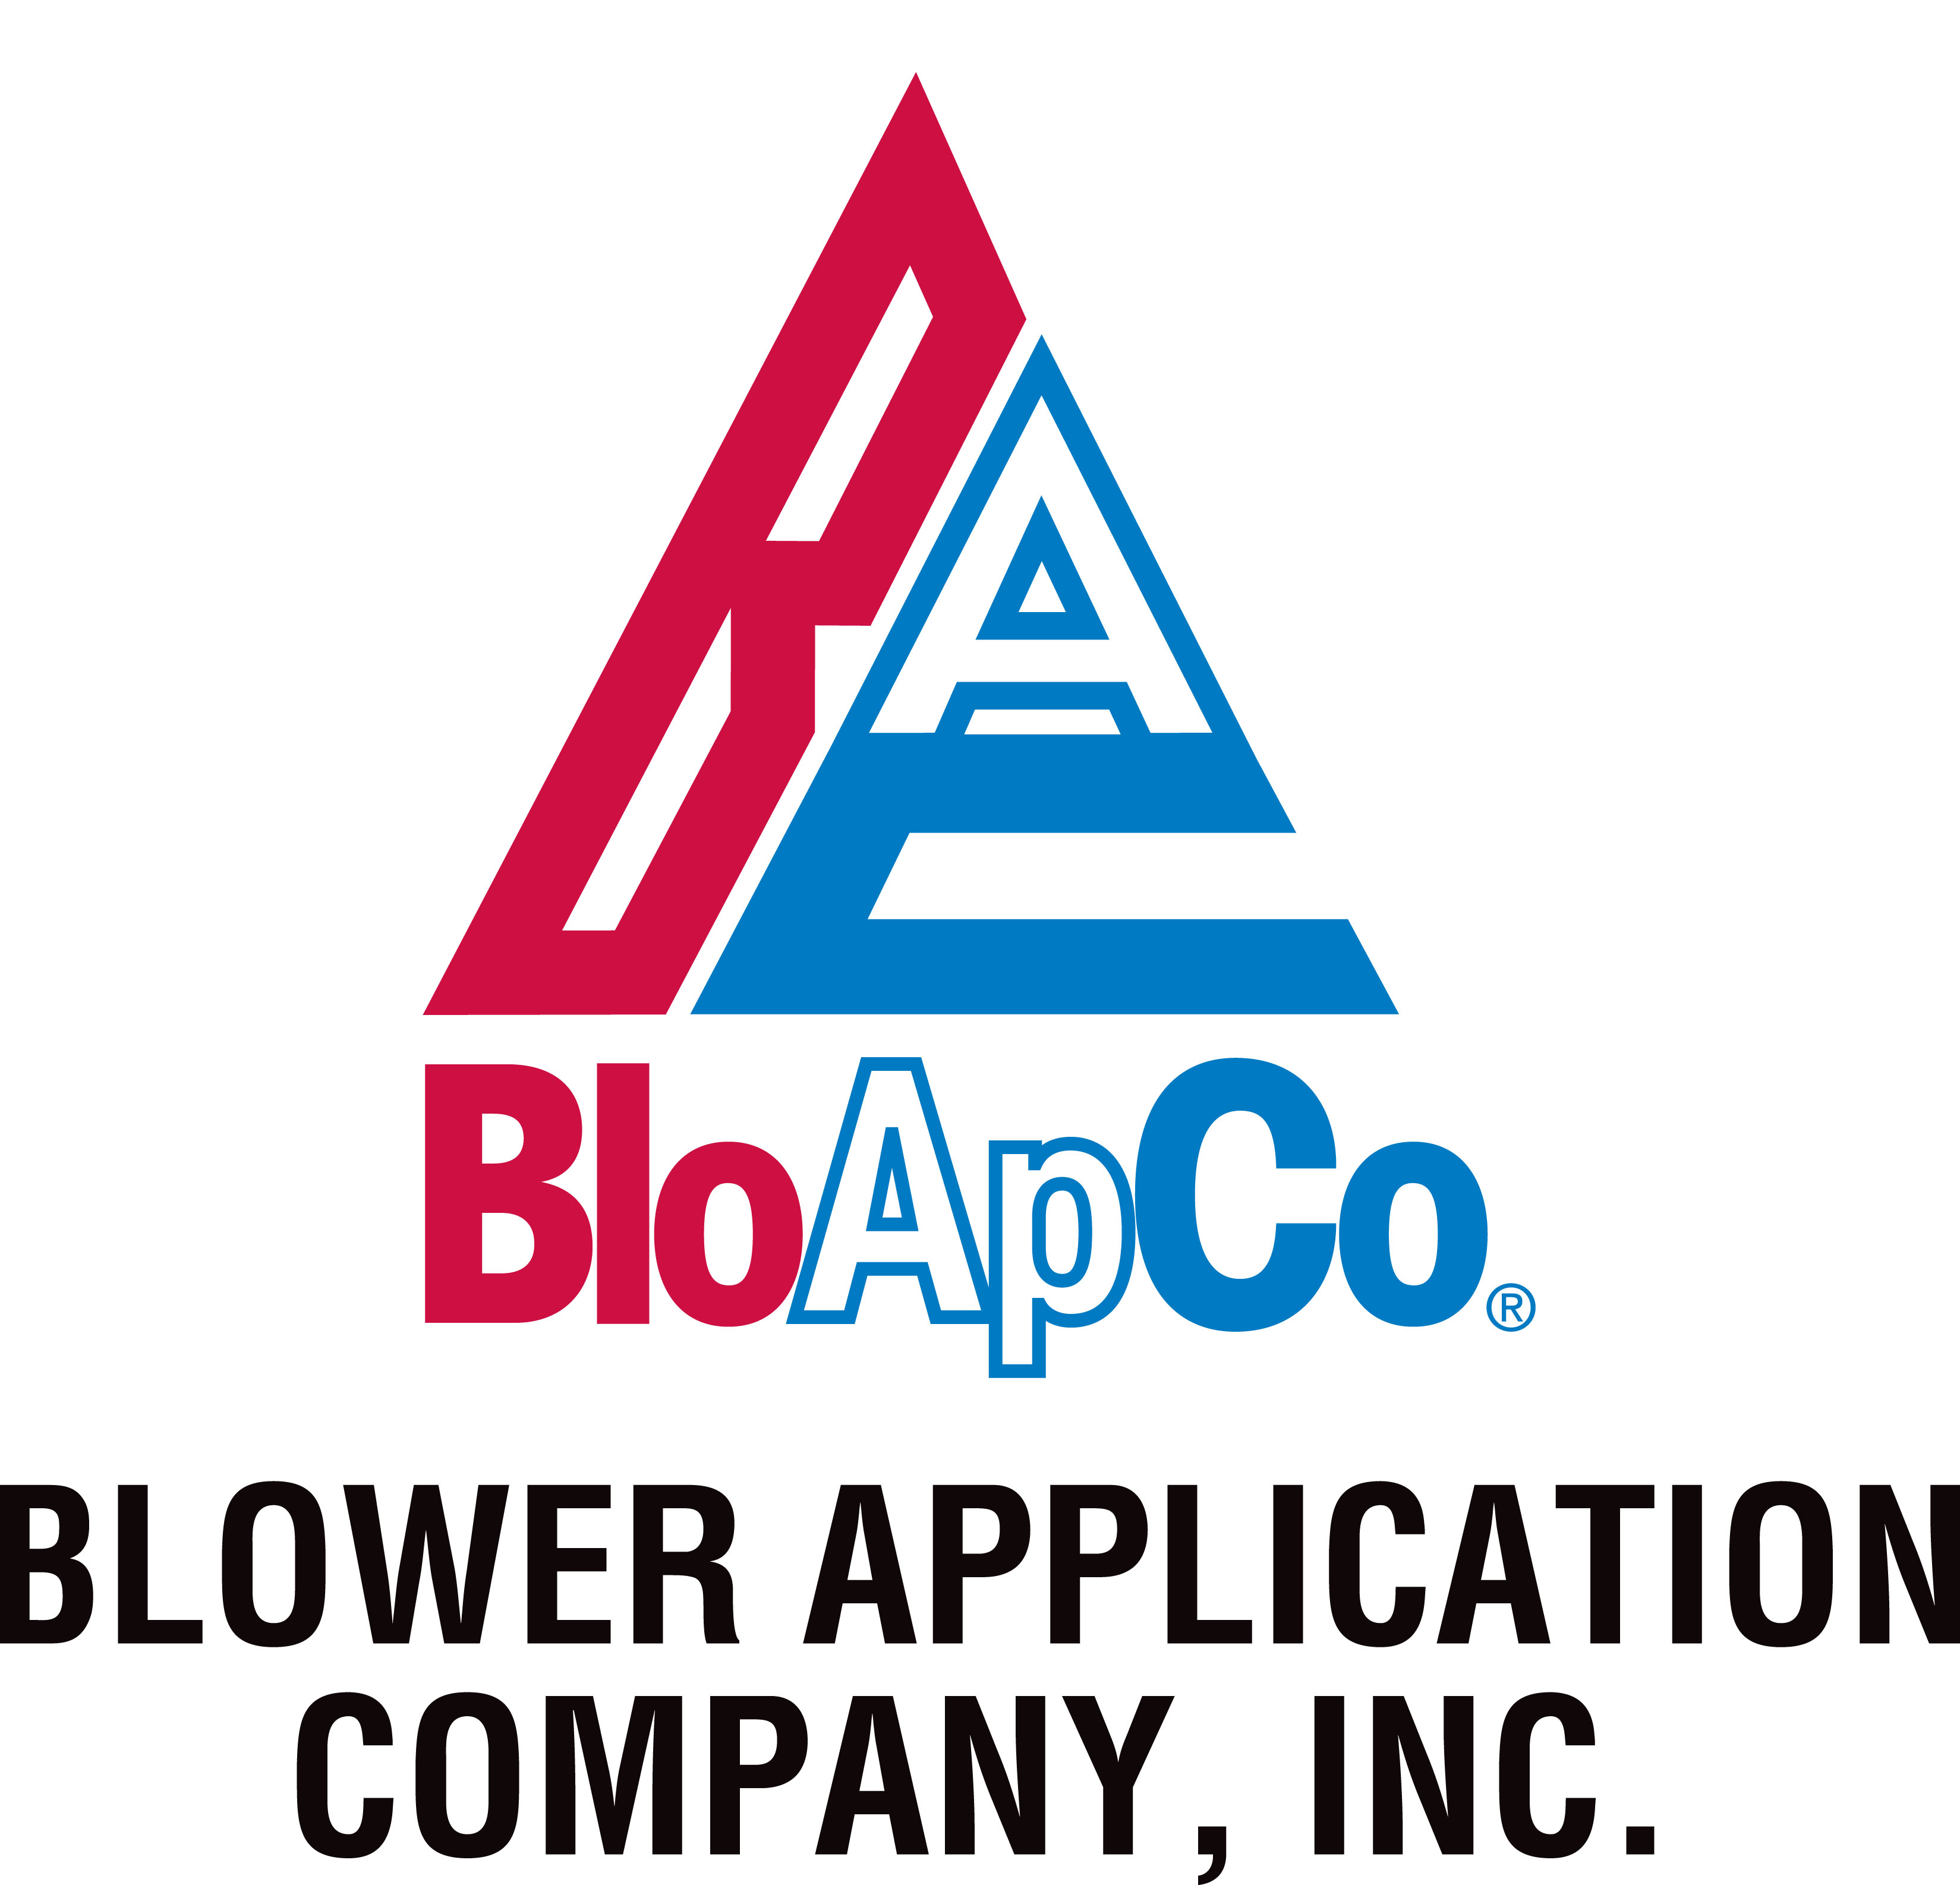 Blower Application Company, Inc